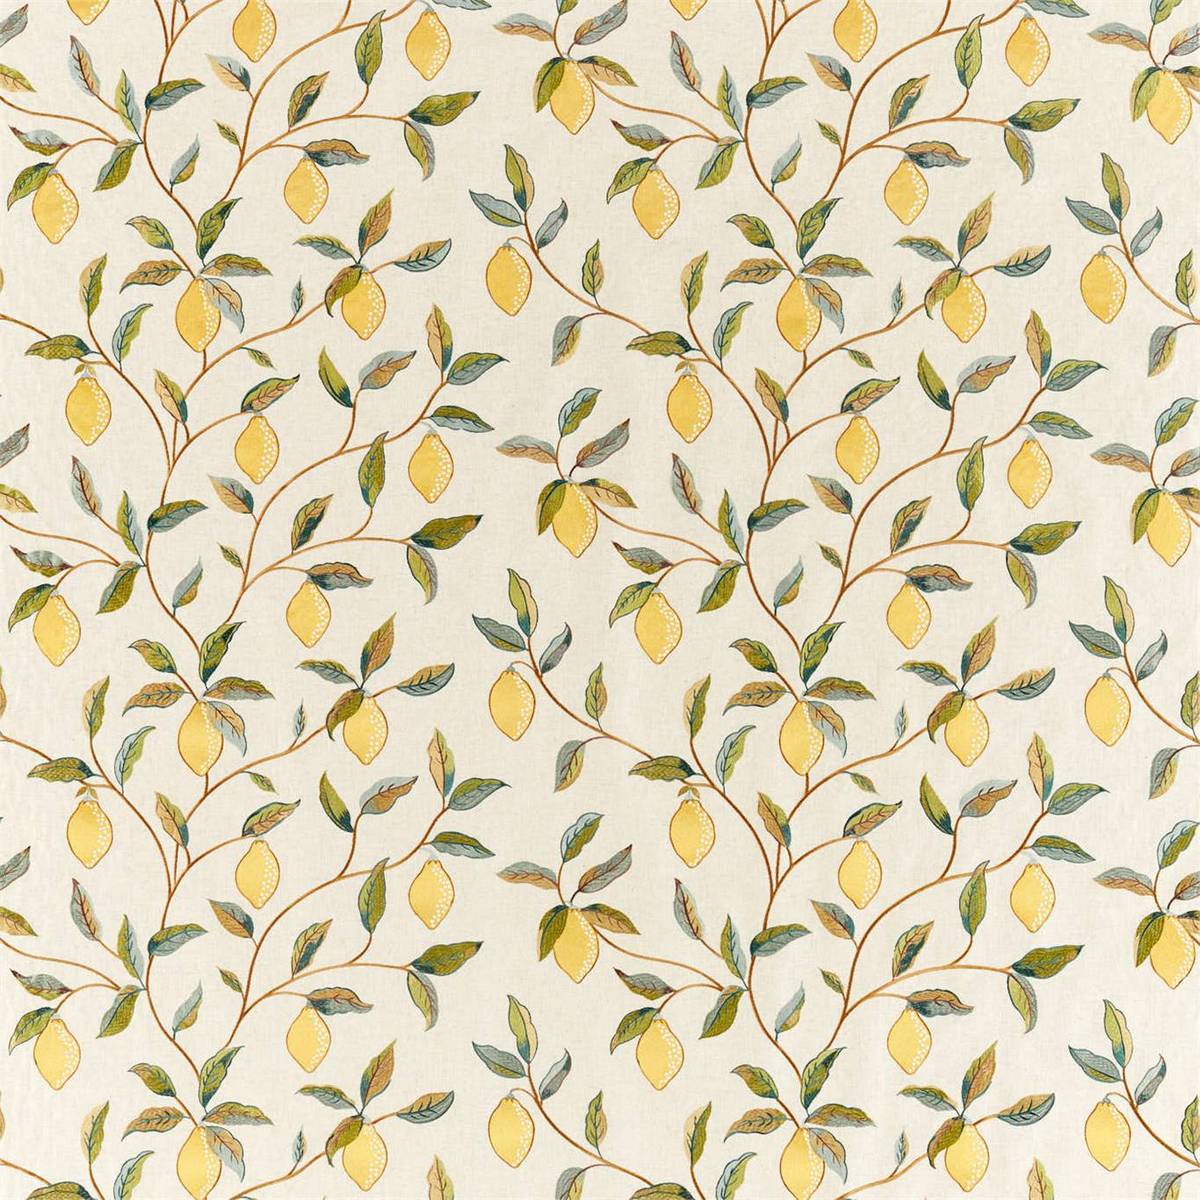 Lemon Tree Embroidery Bayleaf/Lemon Fabric by William Morris & Co.